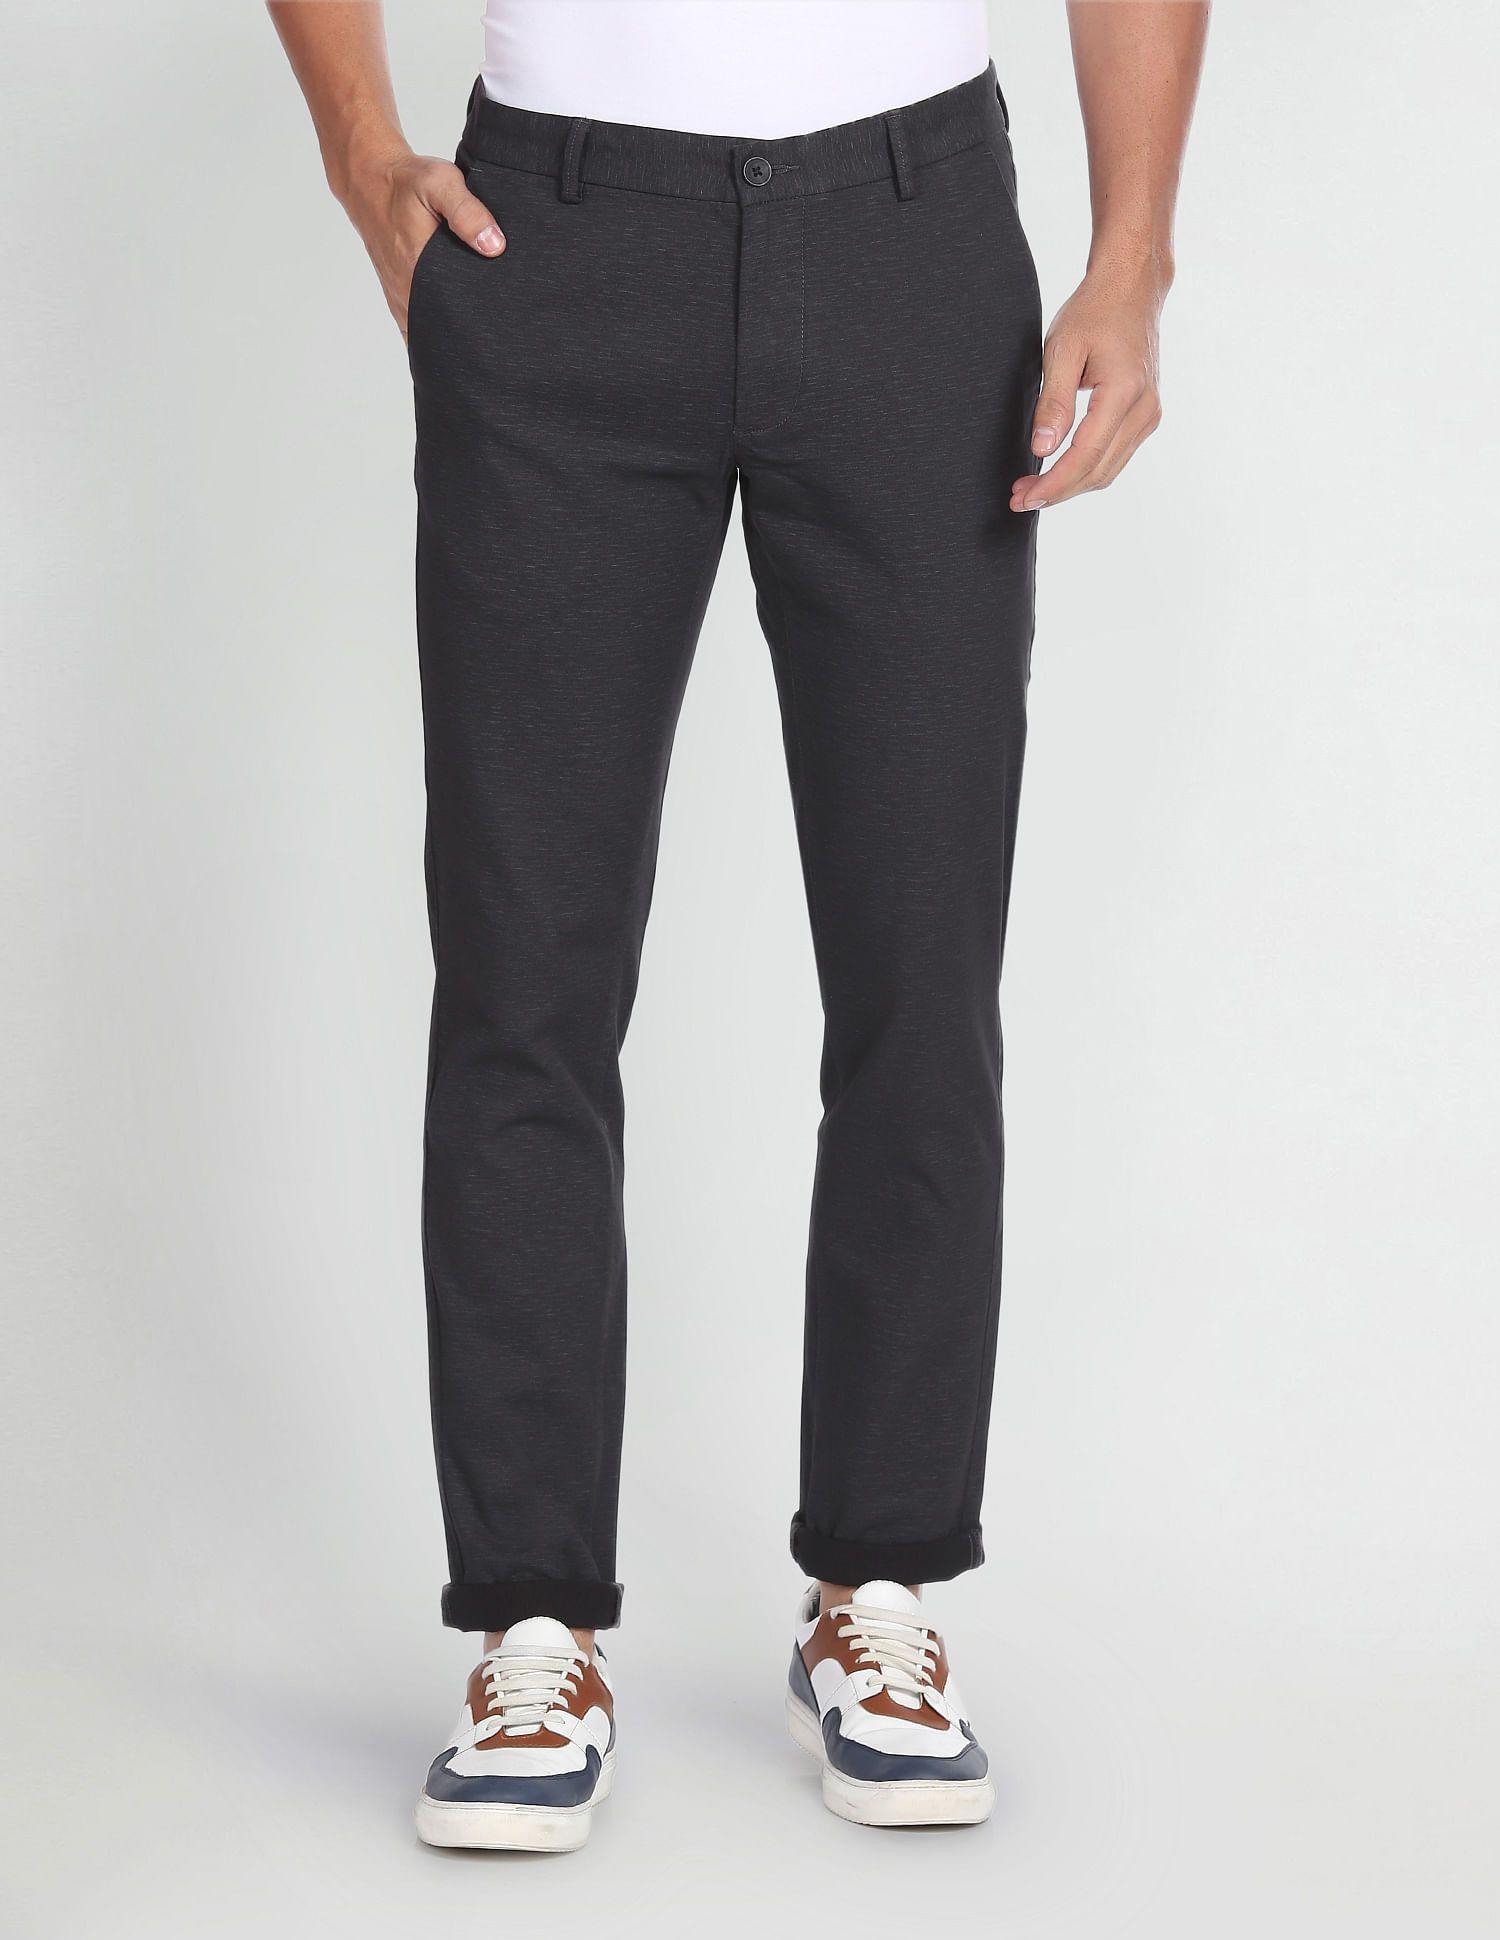 arrow-sport-men-printed-slim-fit-low-rise-chinos-trousers